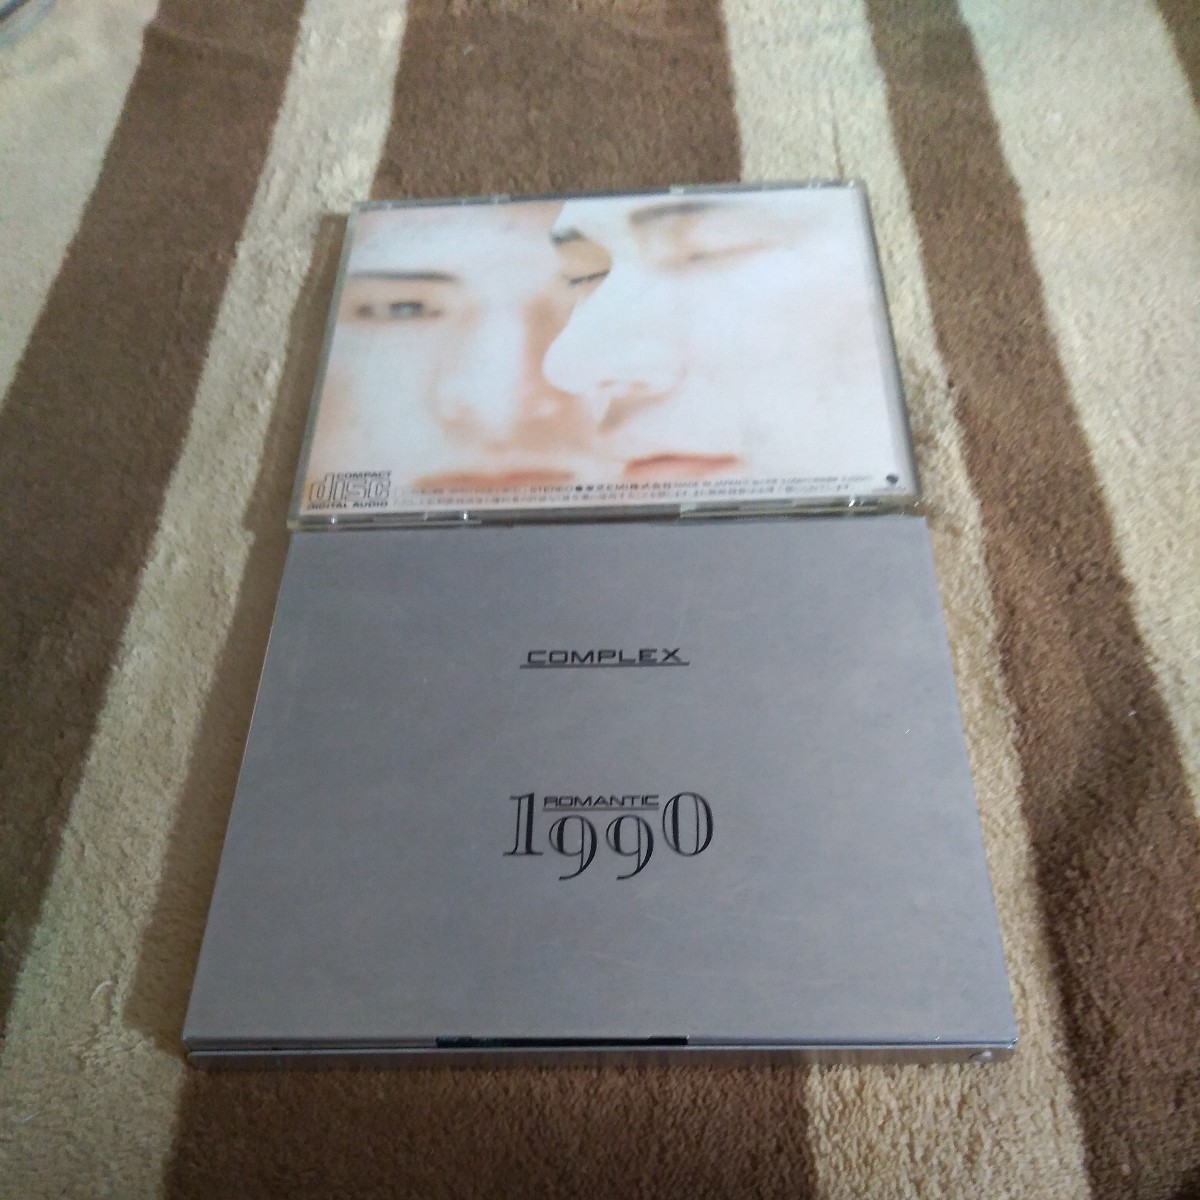 COMPLEX コンプレックス アルバム CD 2枚 セット COMPLEX ROMANTIC 1990 布袋寅泰 吉川晃司 恋をとめないで BE MY BABY_画像2